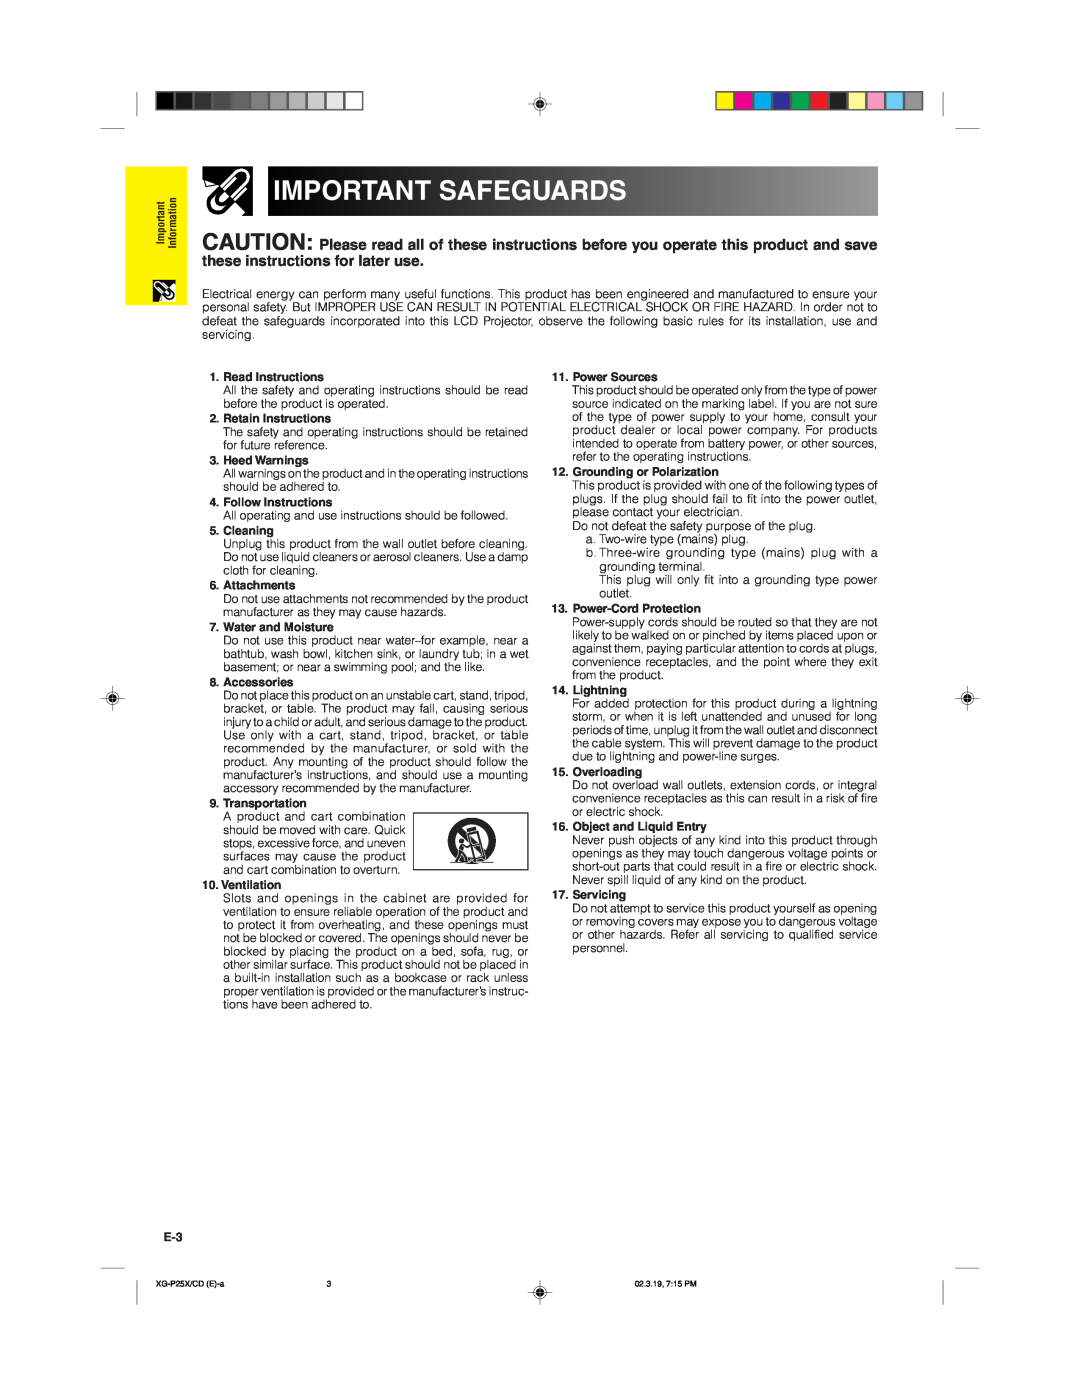 Sharp XG-P25X operation manual Important Safeguards 